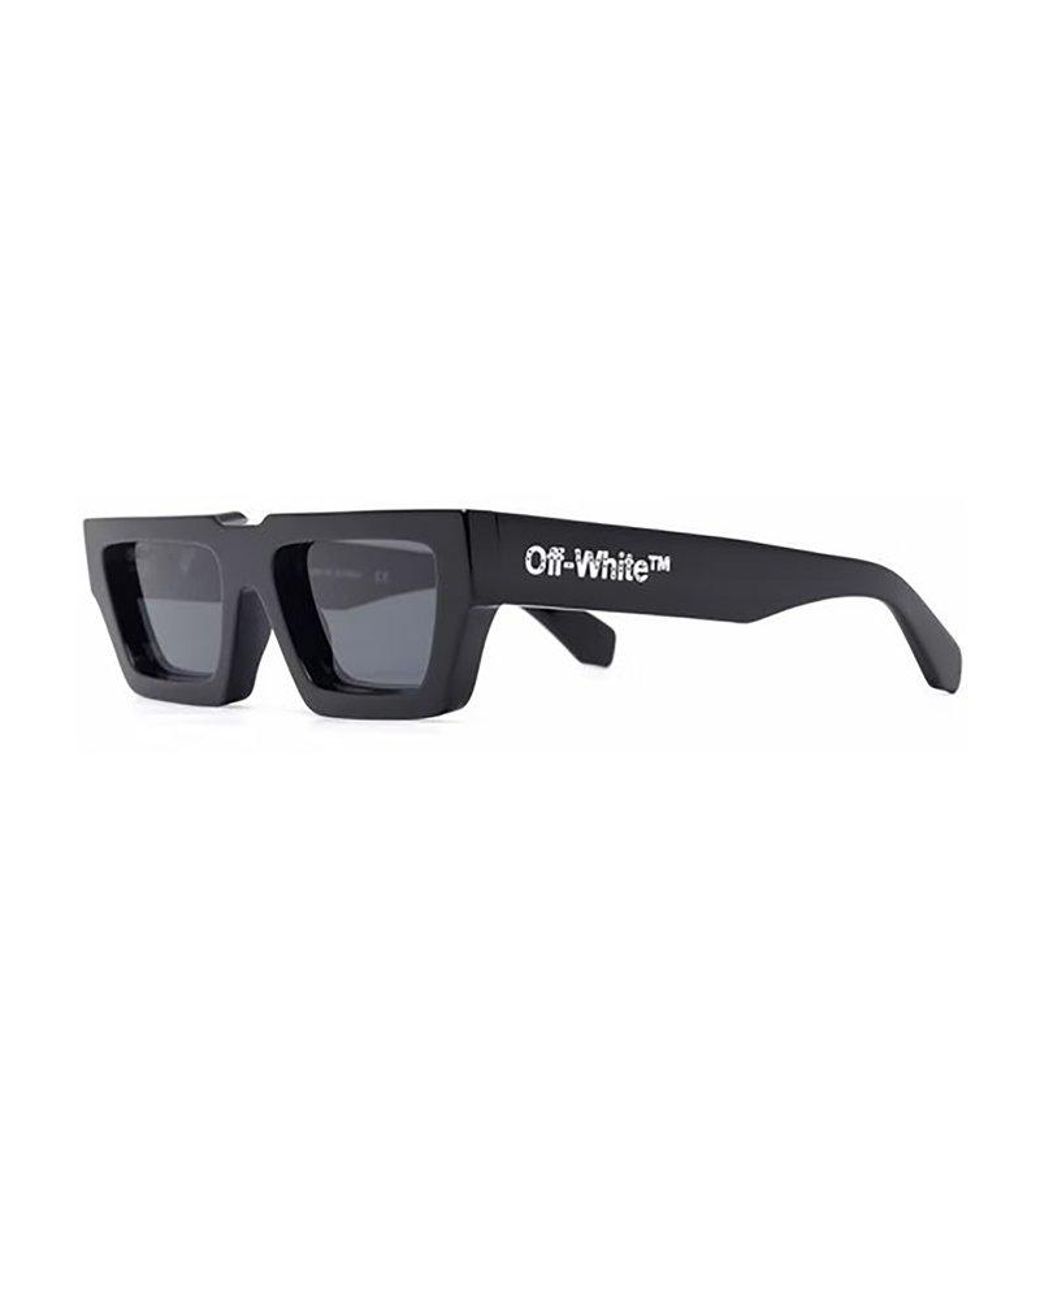 Virgil Sunglasses in black